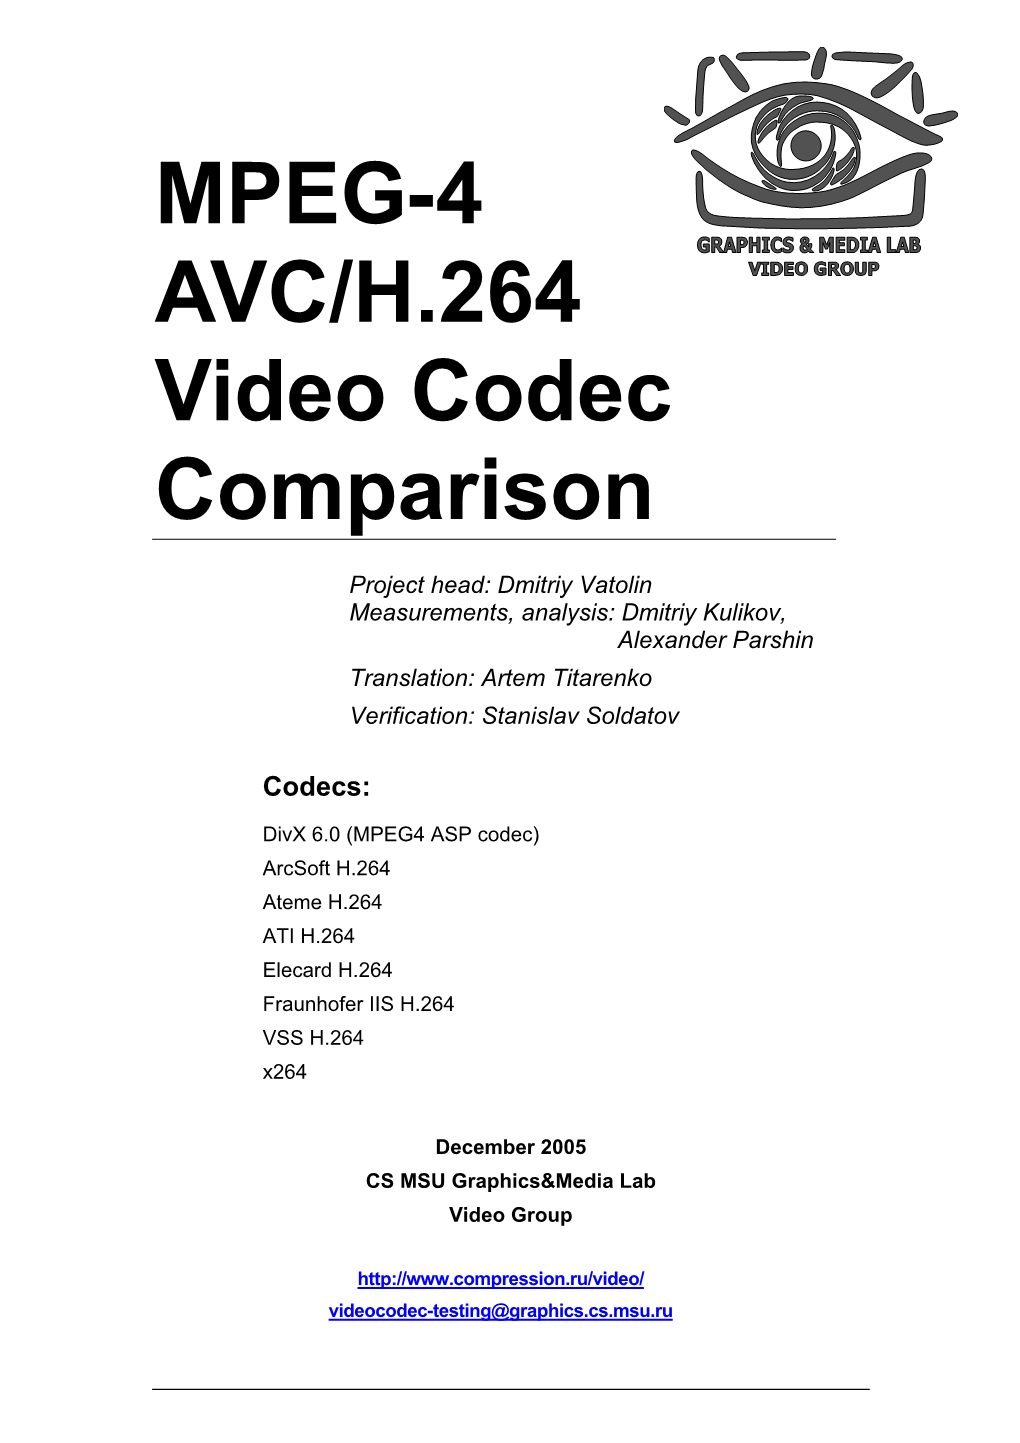 MPEG-4 AVC/H.264 Video Codec Comparison